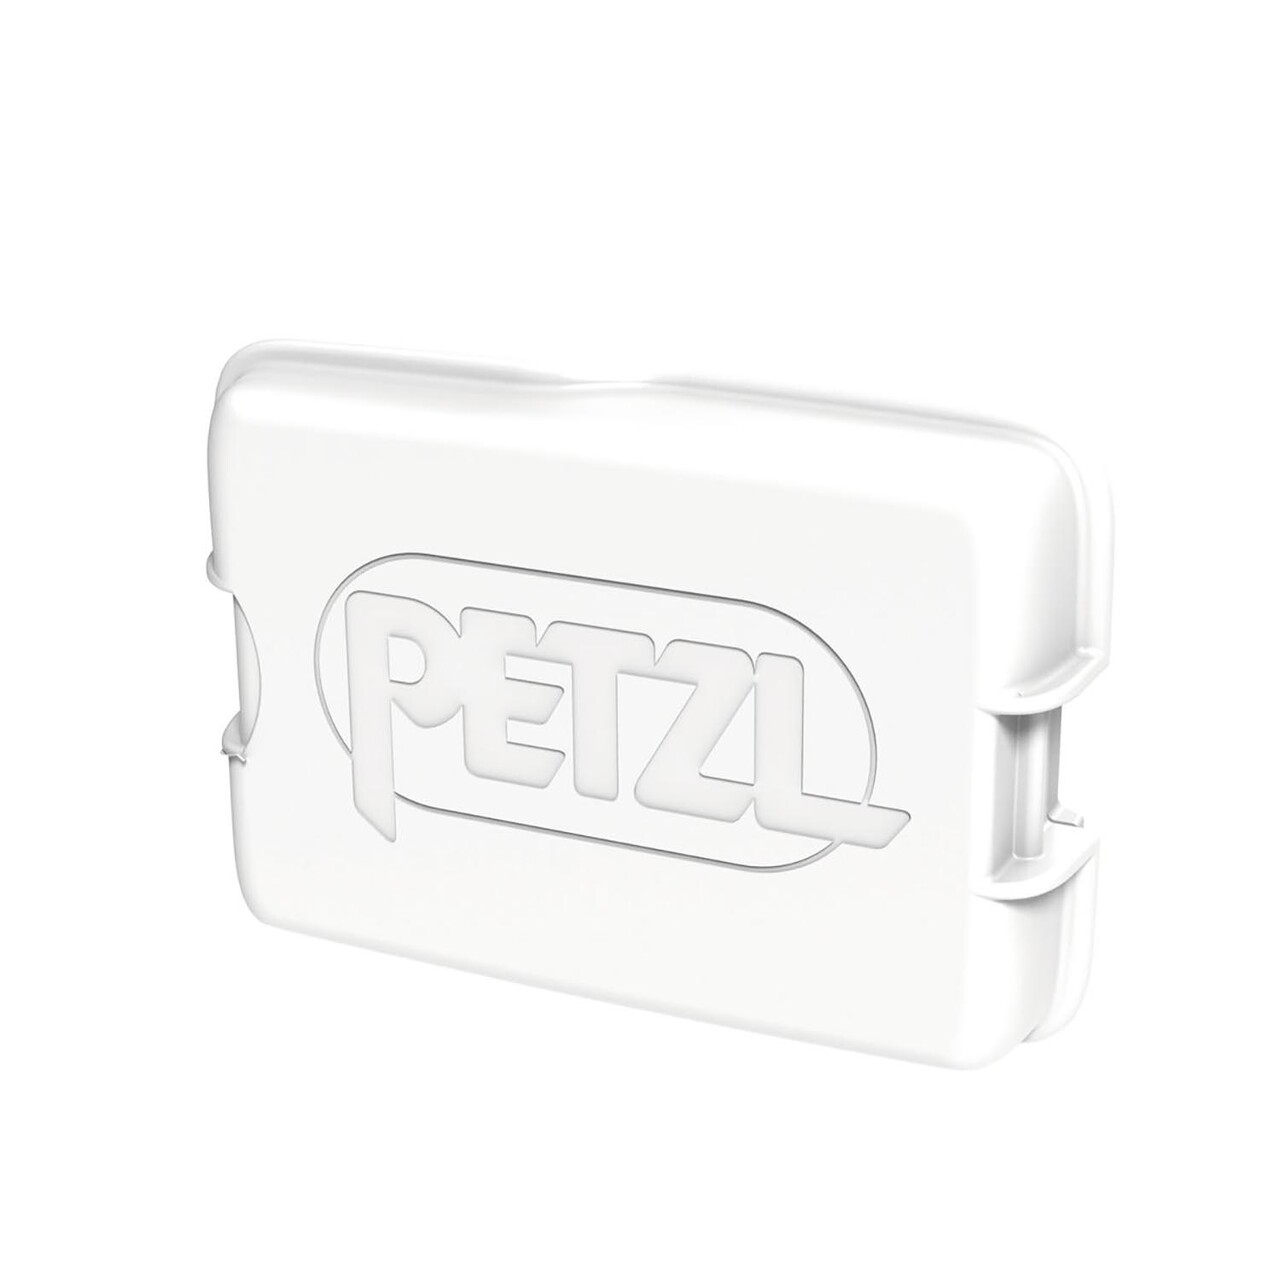 Se Petzl Rechargeable Battery Accu Swift RL hos Friluftsland.dk